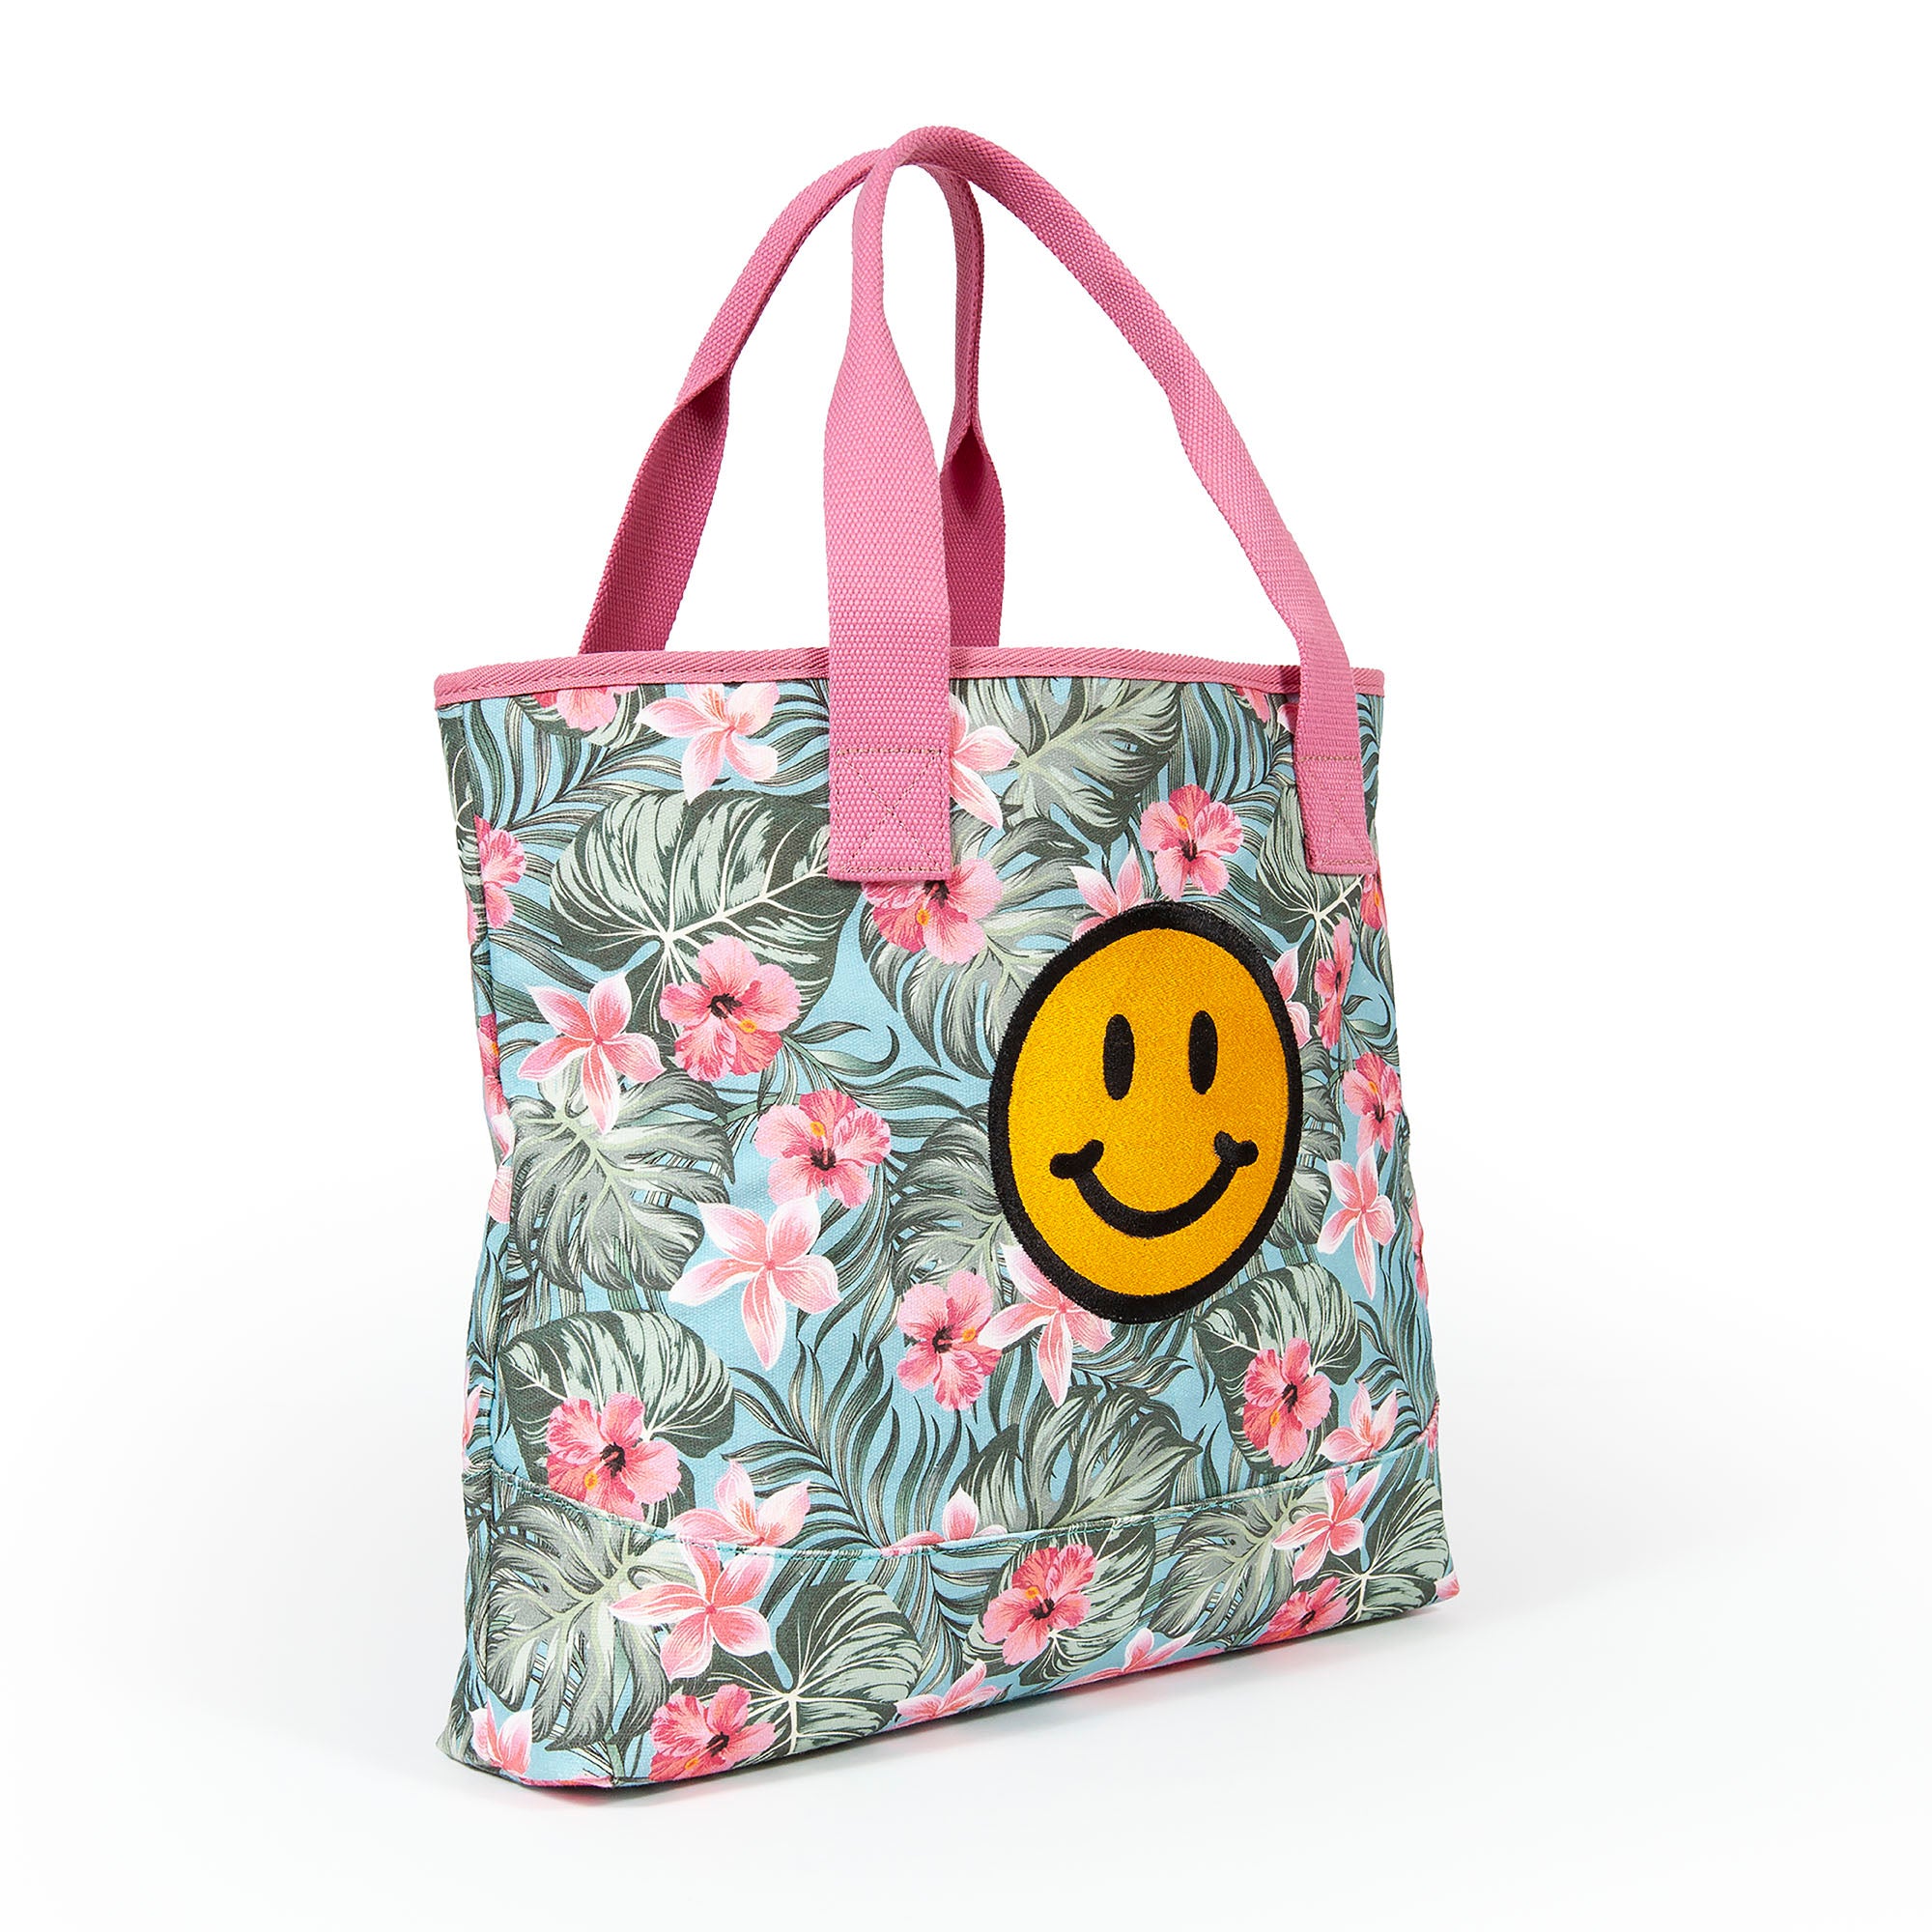 Hawaiian Lady Tote, Tote Bag, Bag, Canvas Carryall Bag, Carry On, Gym Bag, Pool Bag, Beach Bag, Over Night Bag, Everyday Bag, Daisy, 100% Cotton, Pattern